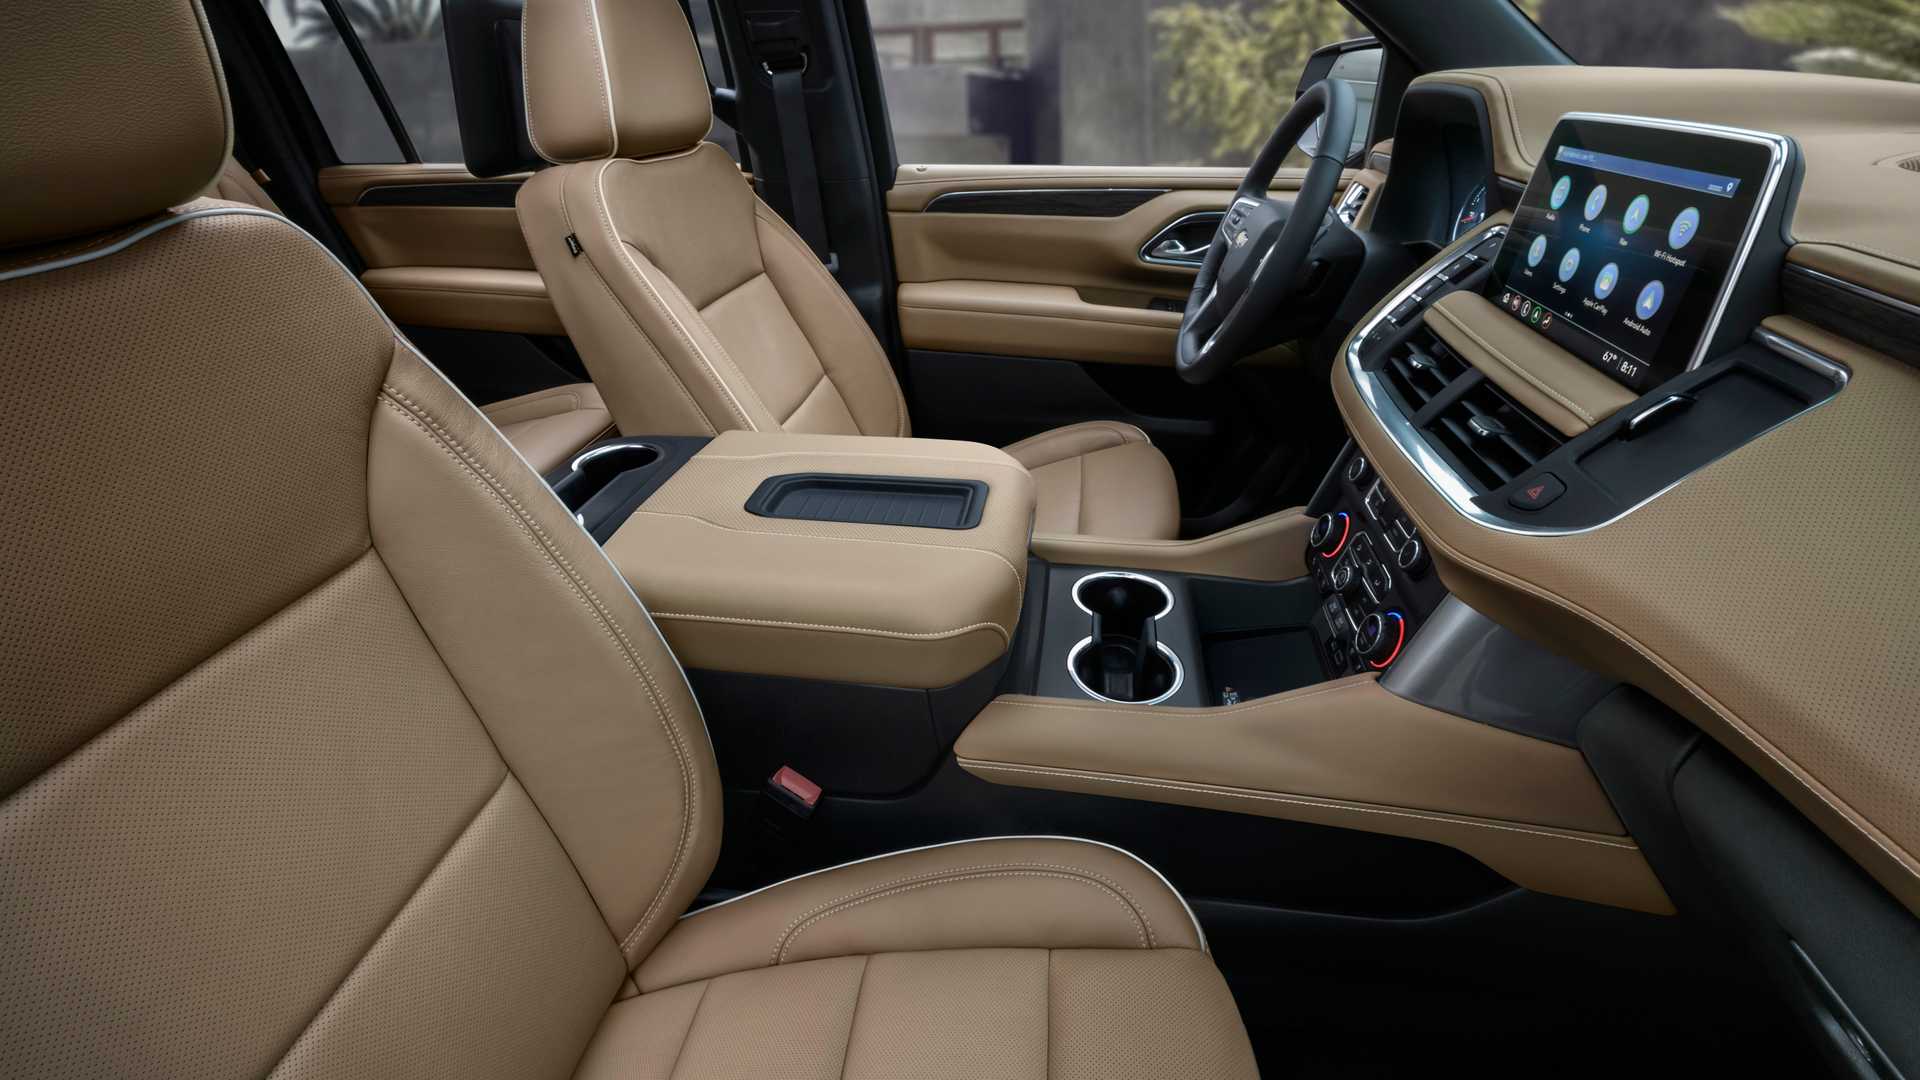 Chevrolet Suburban interior - Front Seats